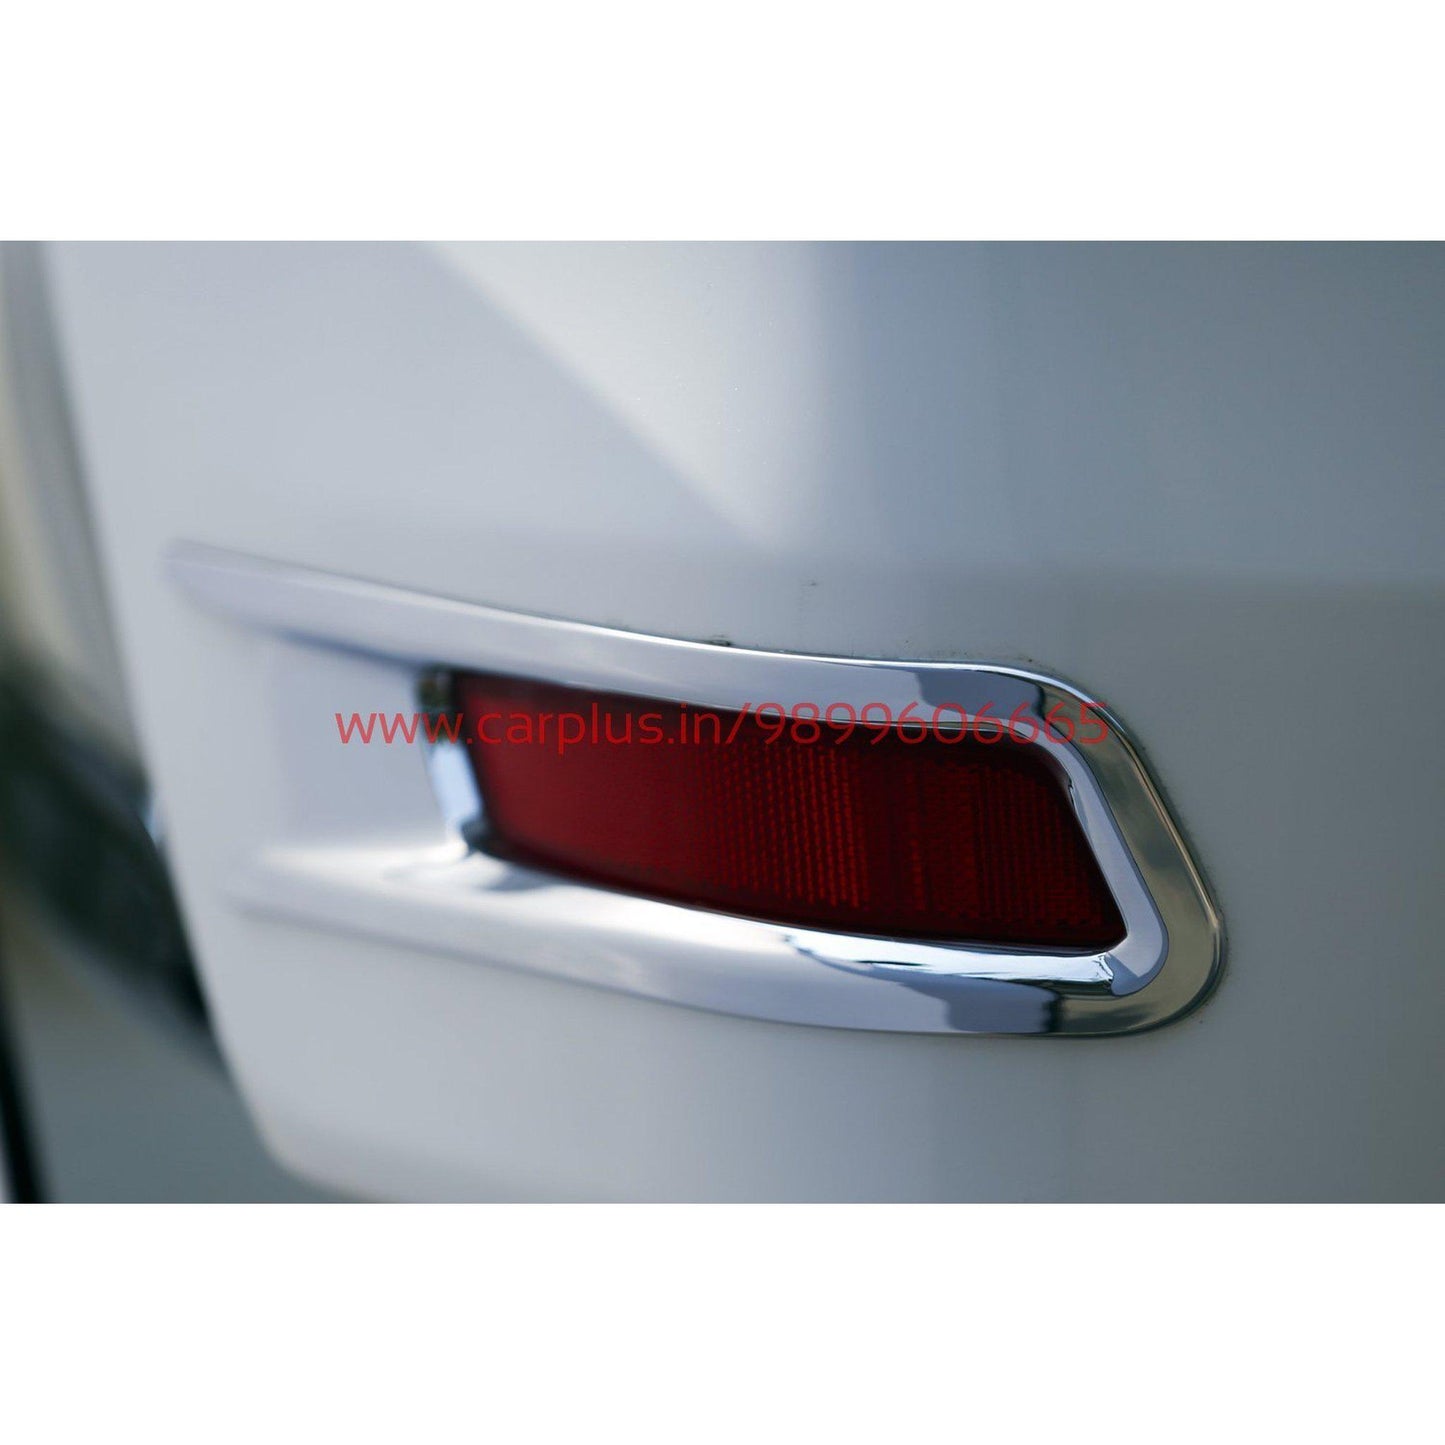 
                  
                    KMH Rear Reflector Cover Chrome for Toyota Altis (2014, Set of 2Pcs) CN LEAGUE EXTERIOR.
                  
                